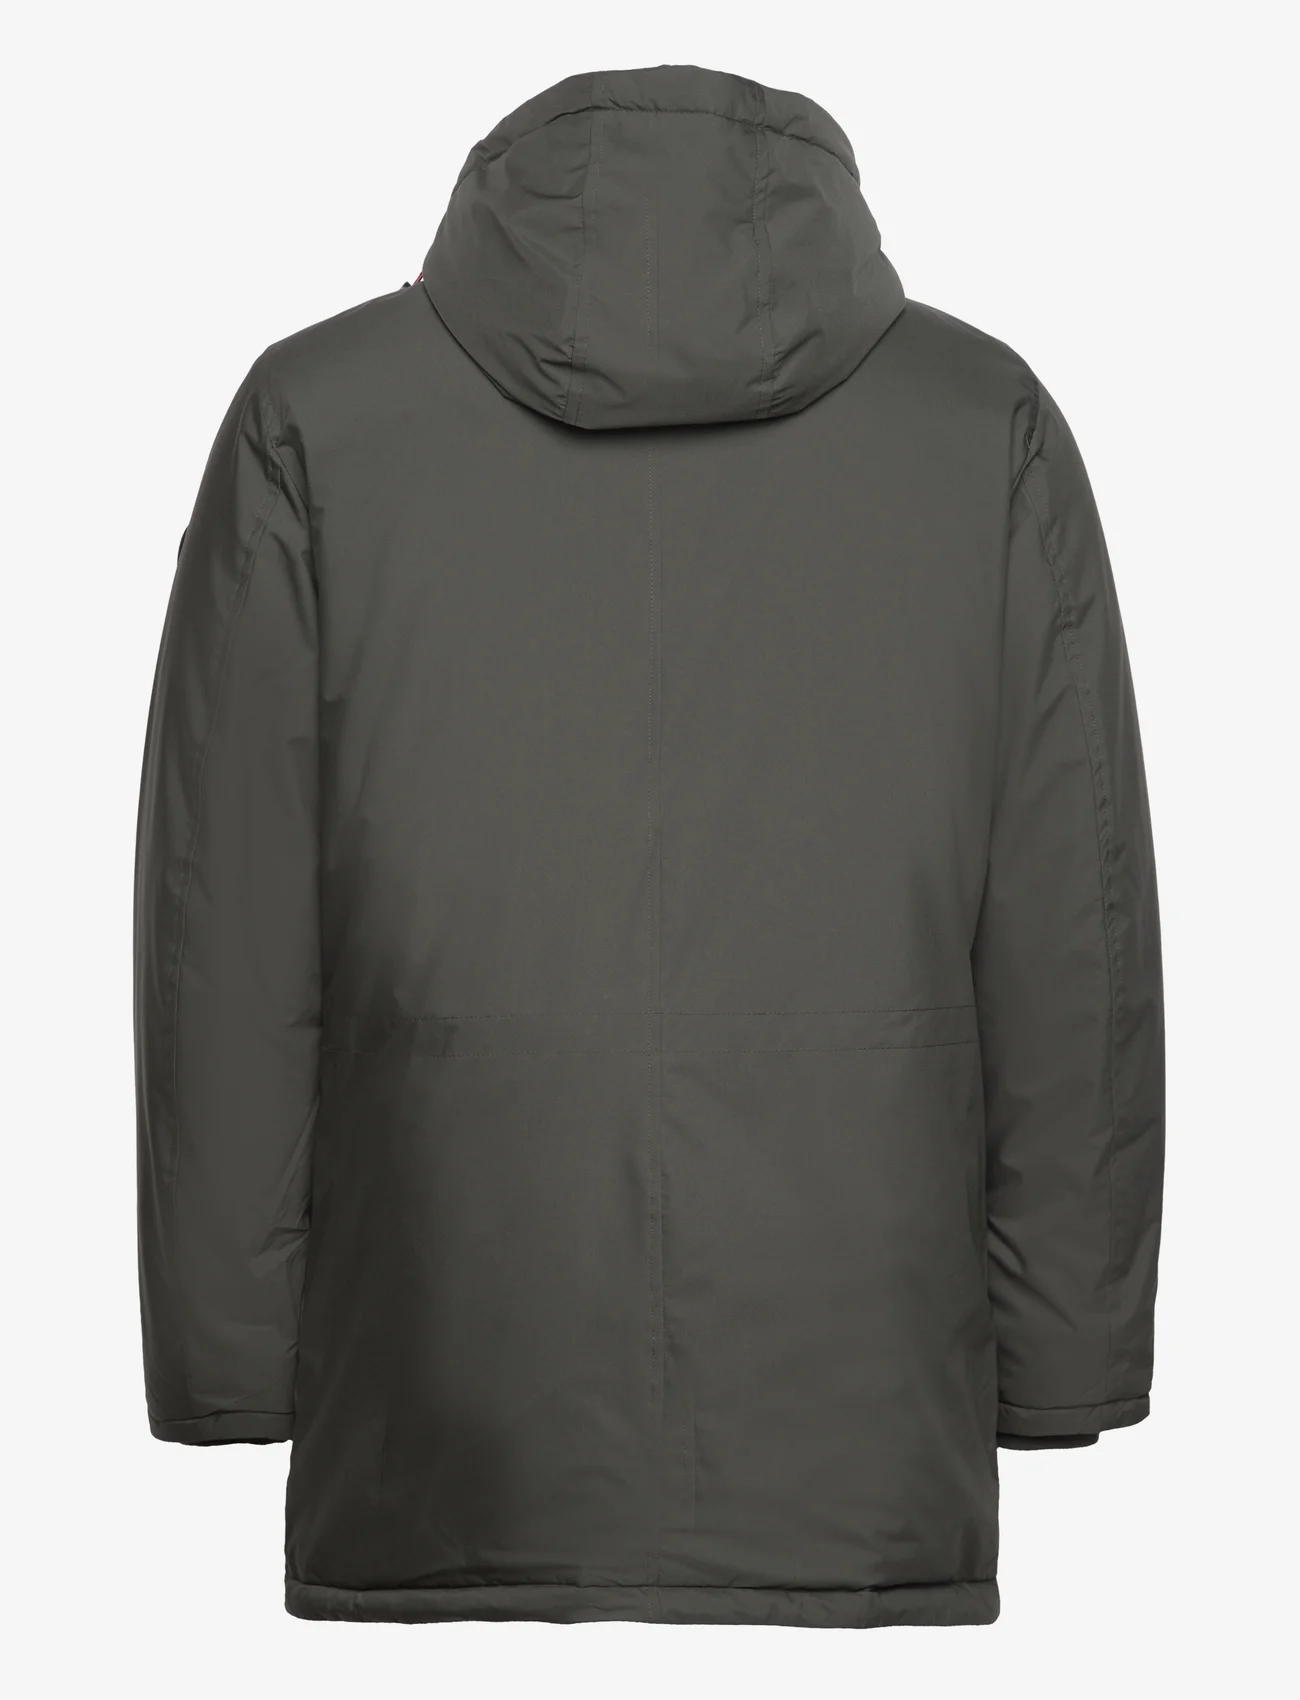 Lindbergh - Hooded parka jacket - winter jackets - dk army - 1